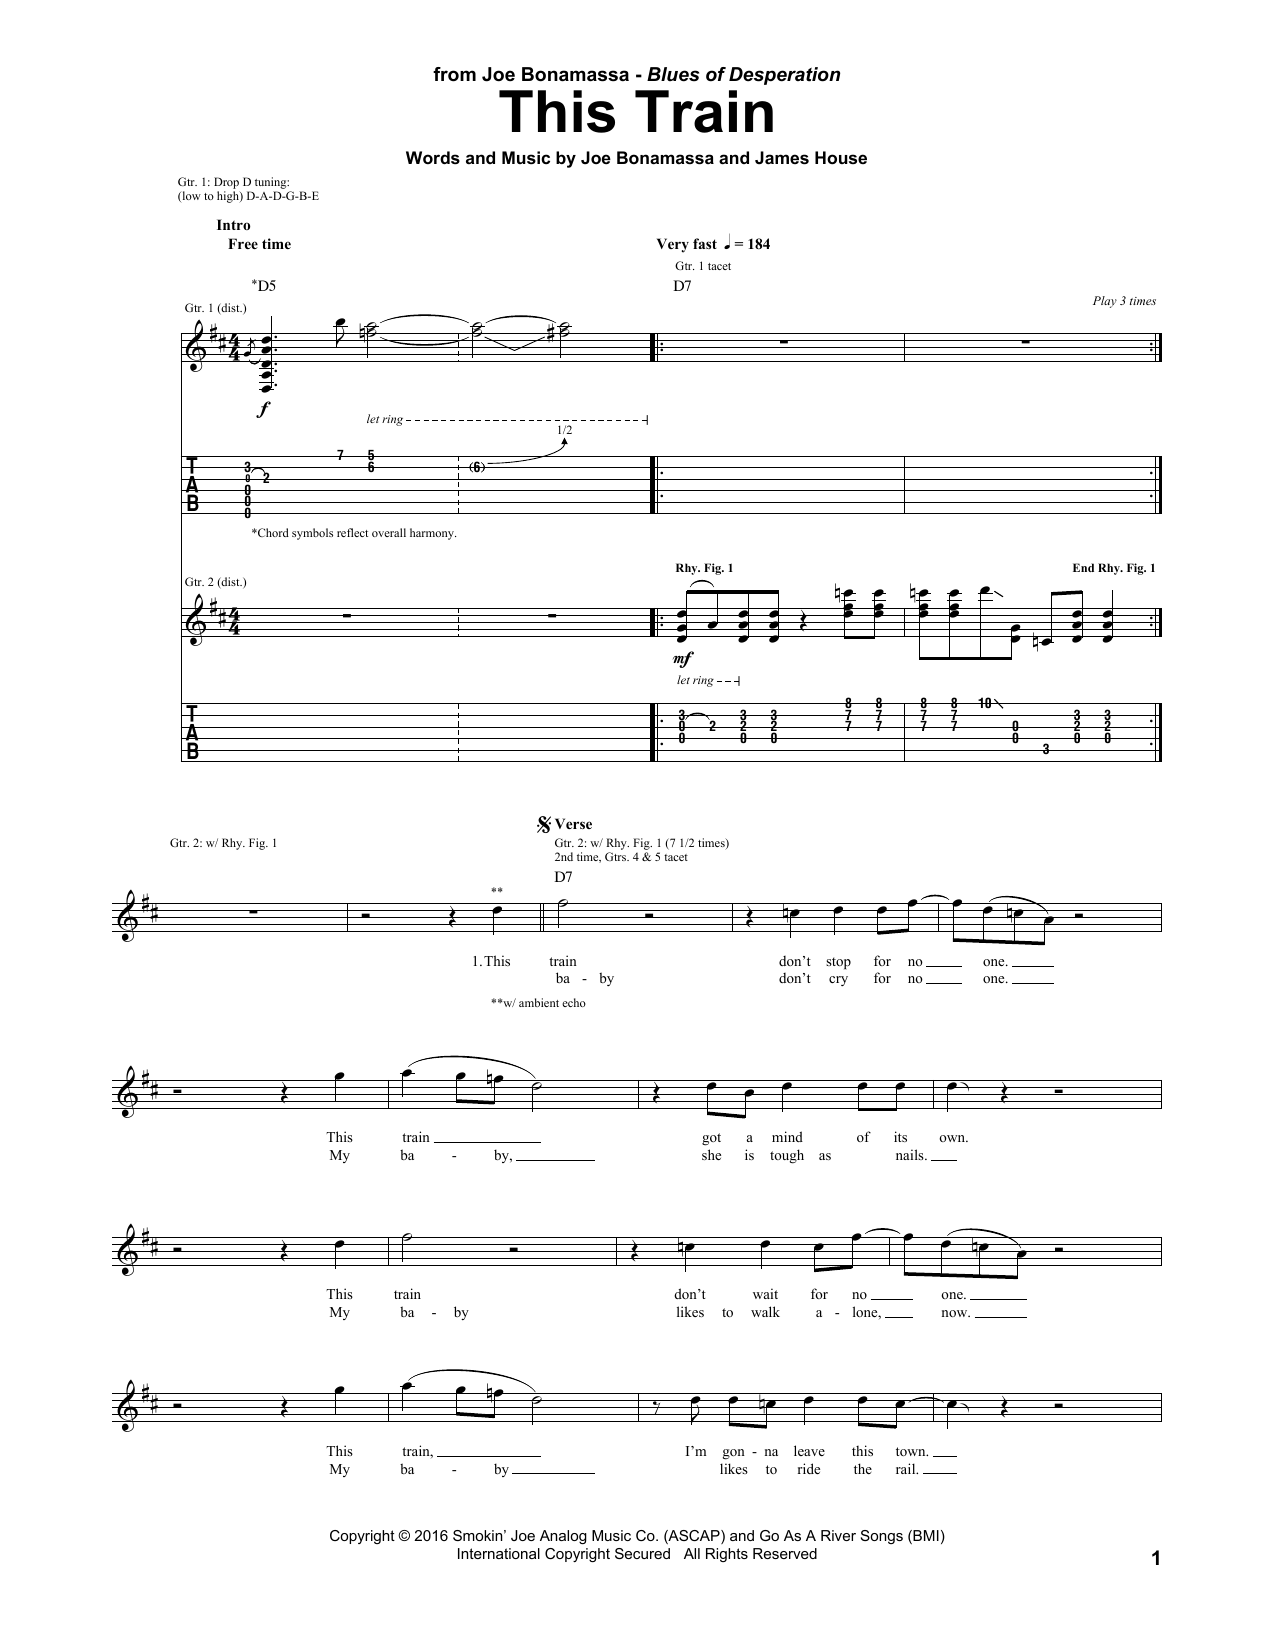 Download Joe Bonamassa This Train Sheet Music and learn how to play Guitar Tab PDF digital score in minutes